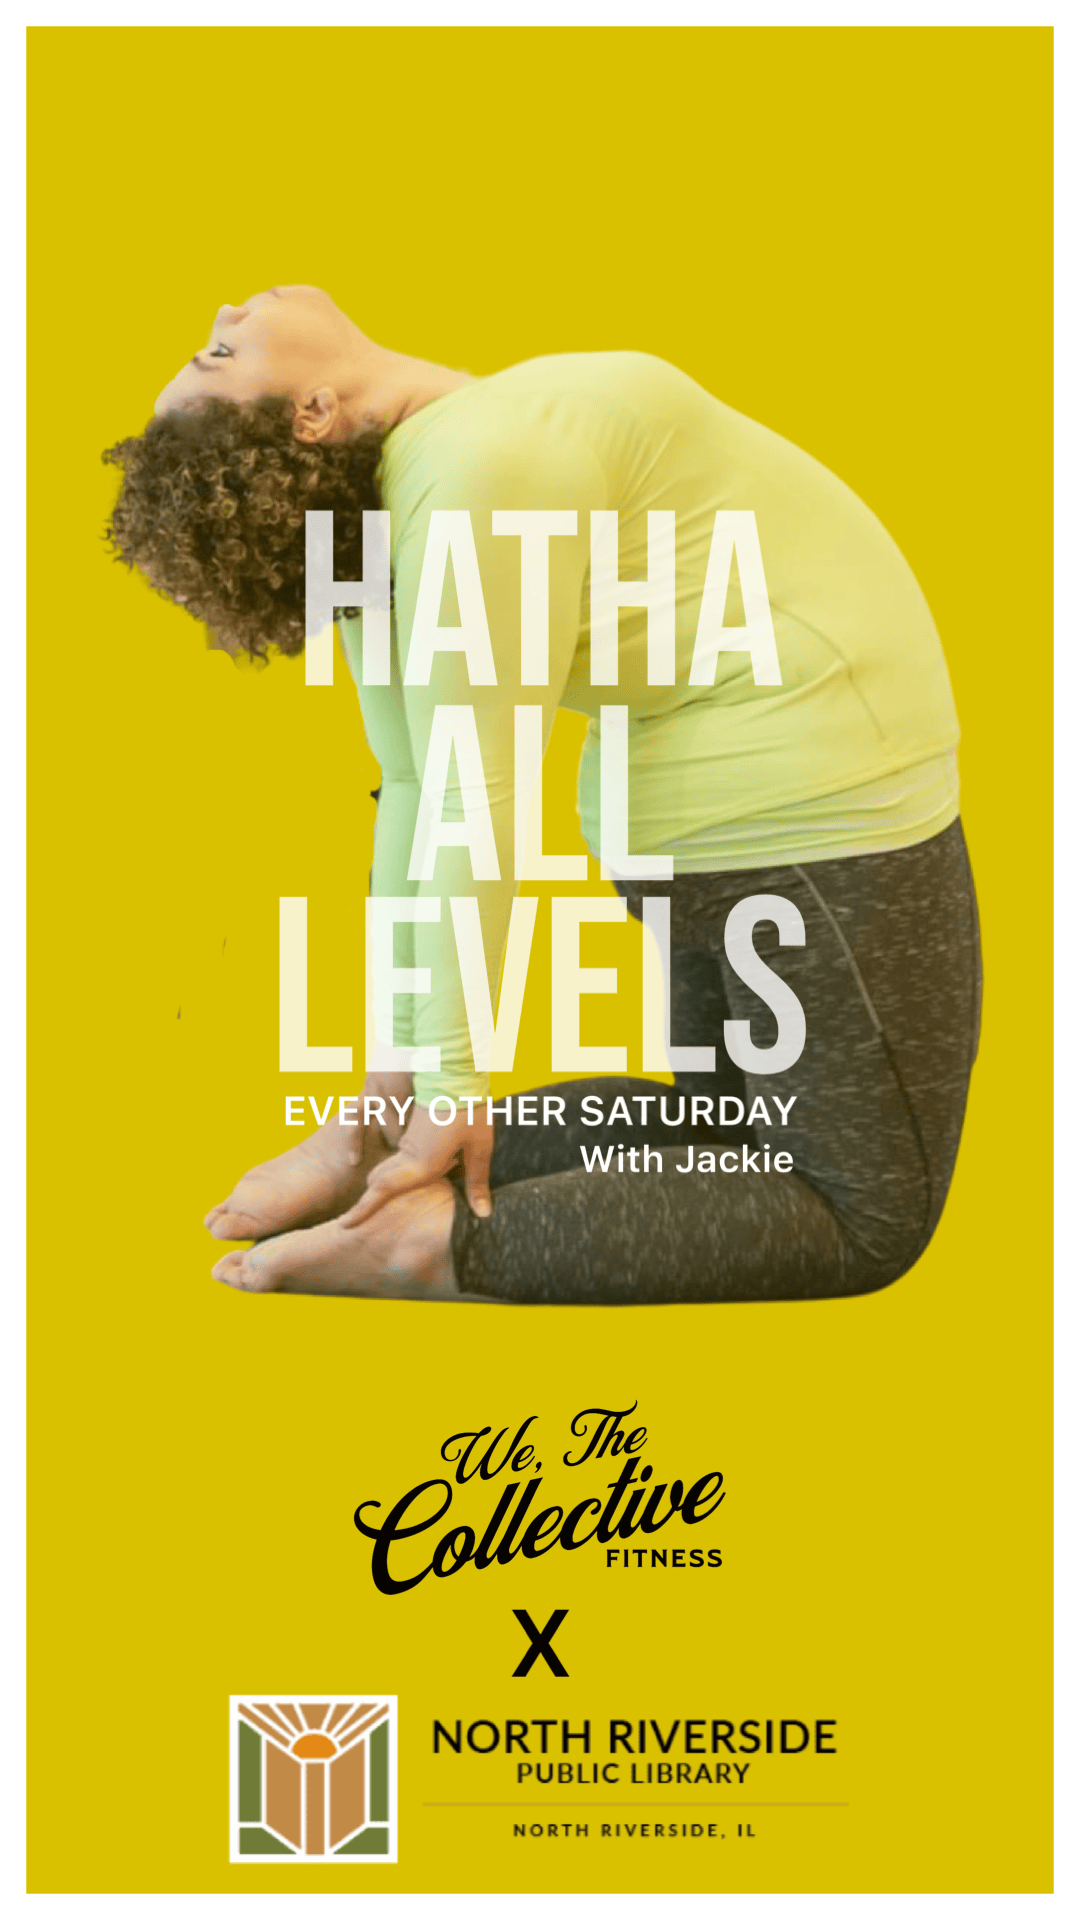 Hatha all levels program flyer and link.